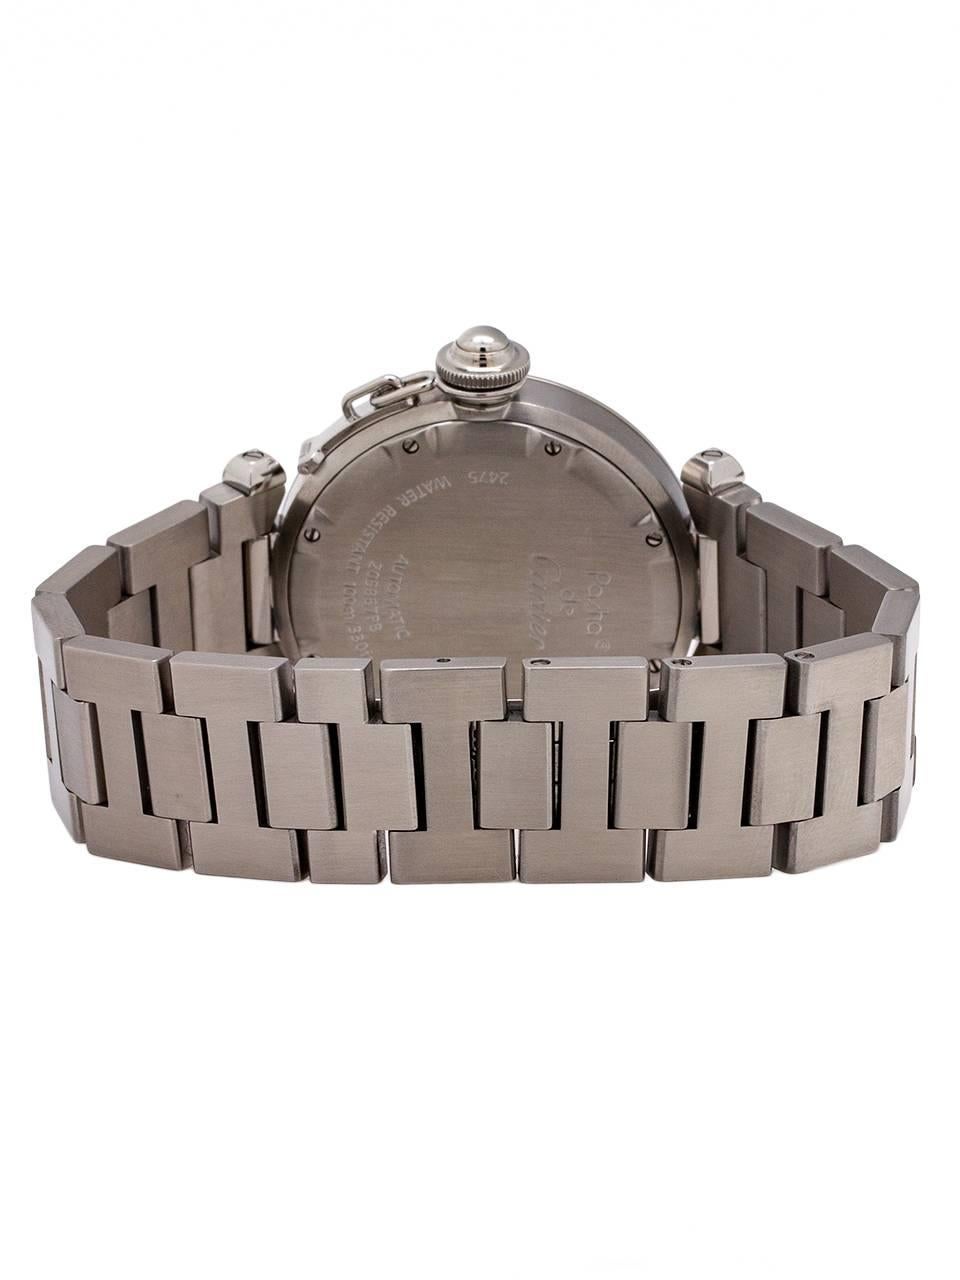 Women's or Men's Cartier Stainless Steel Pasha C Big Date wristwatch, circa 2000s